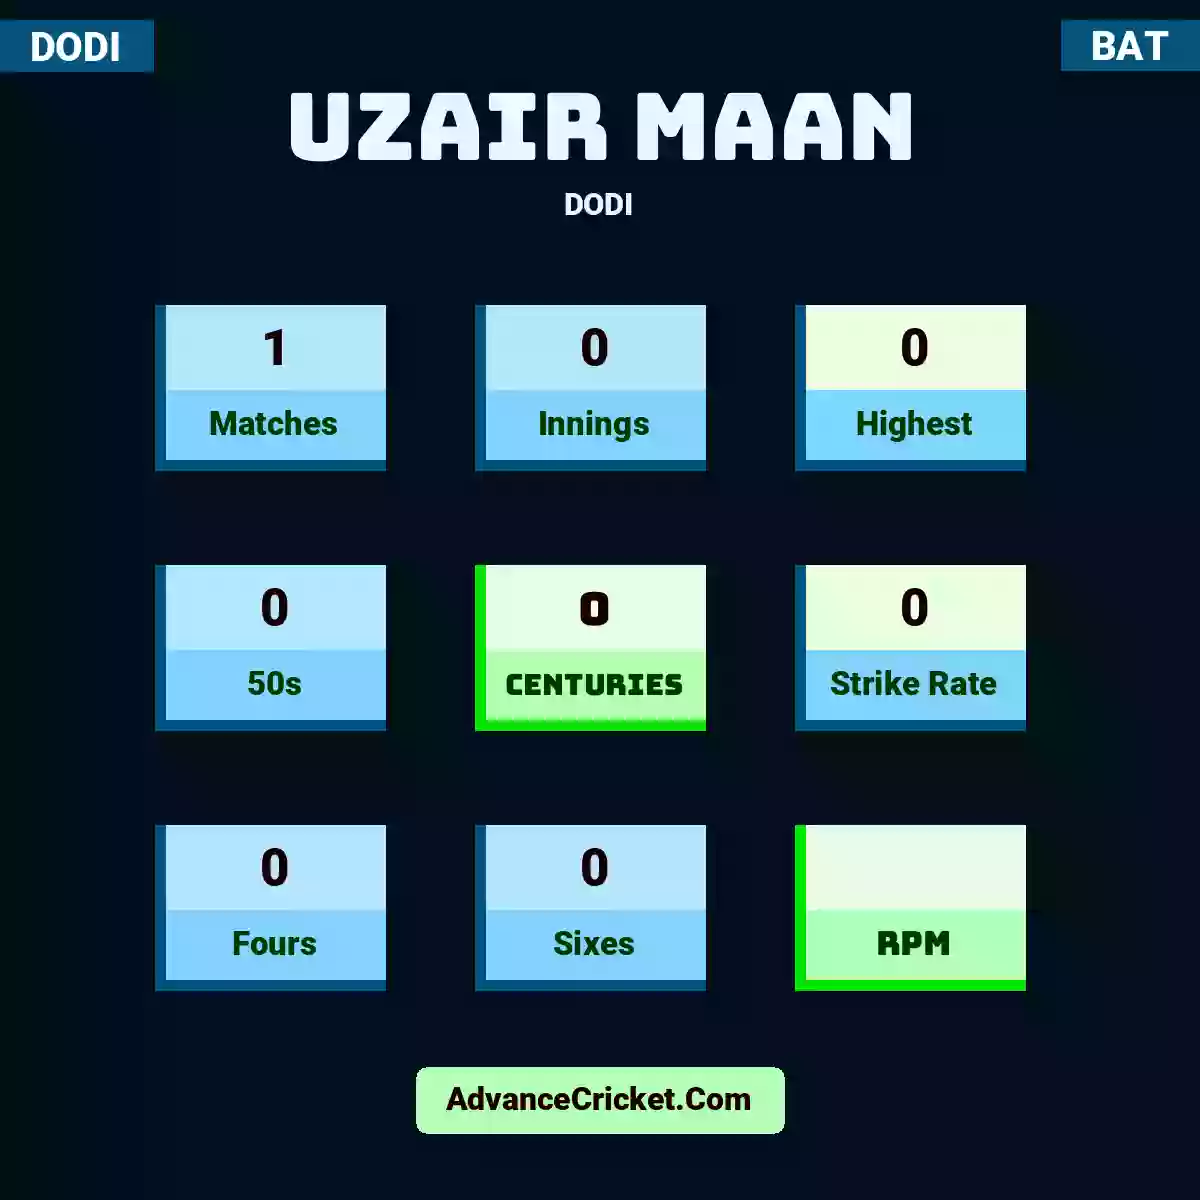 Uzair Maan DODI , Uzair Maan played 1 matches, scored 0 runs as highest, 0 half-centuries, and 0 centuries, with a strike rate of 0. U.Maan hit 0 fours and 0 sixes.